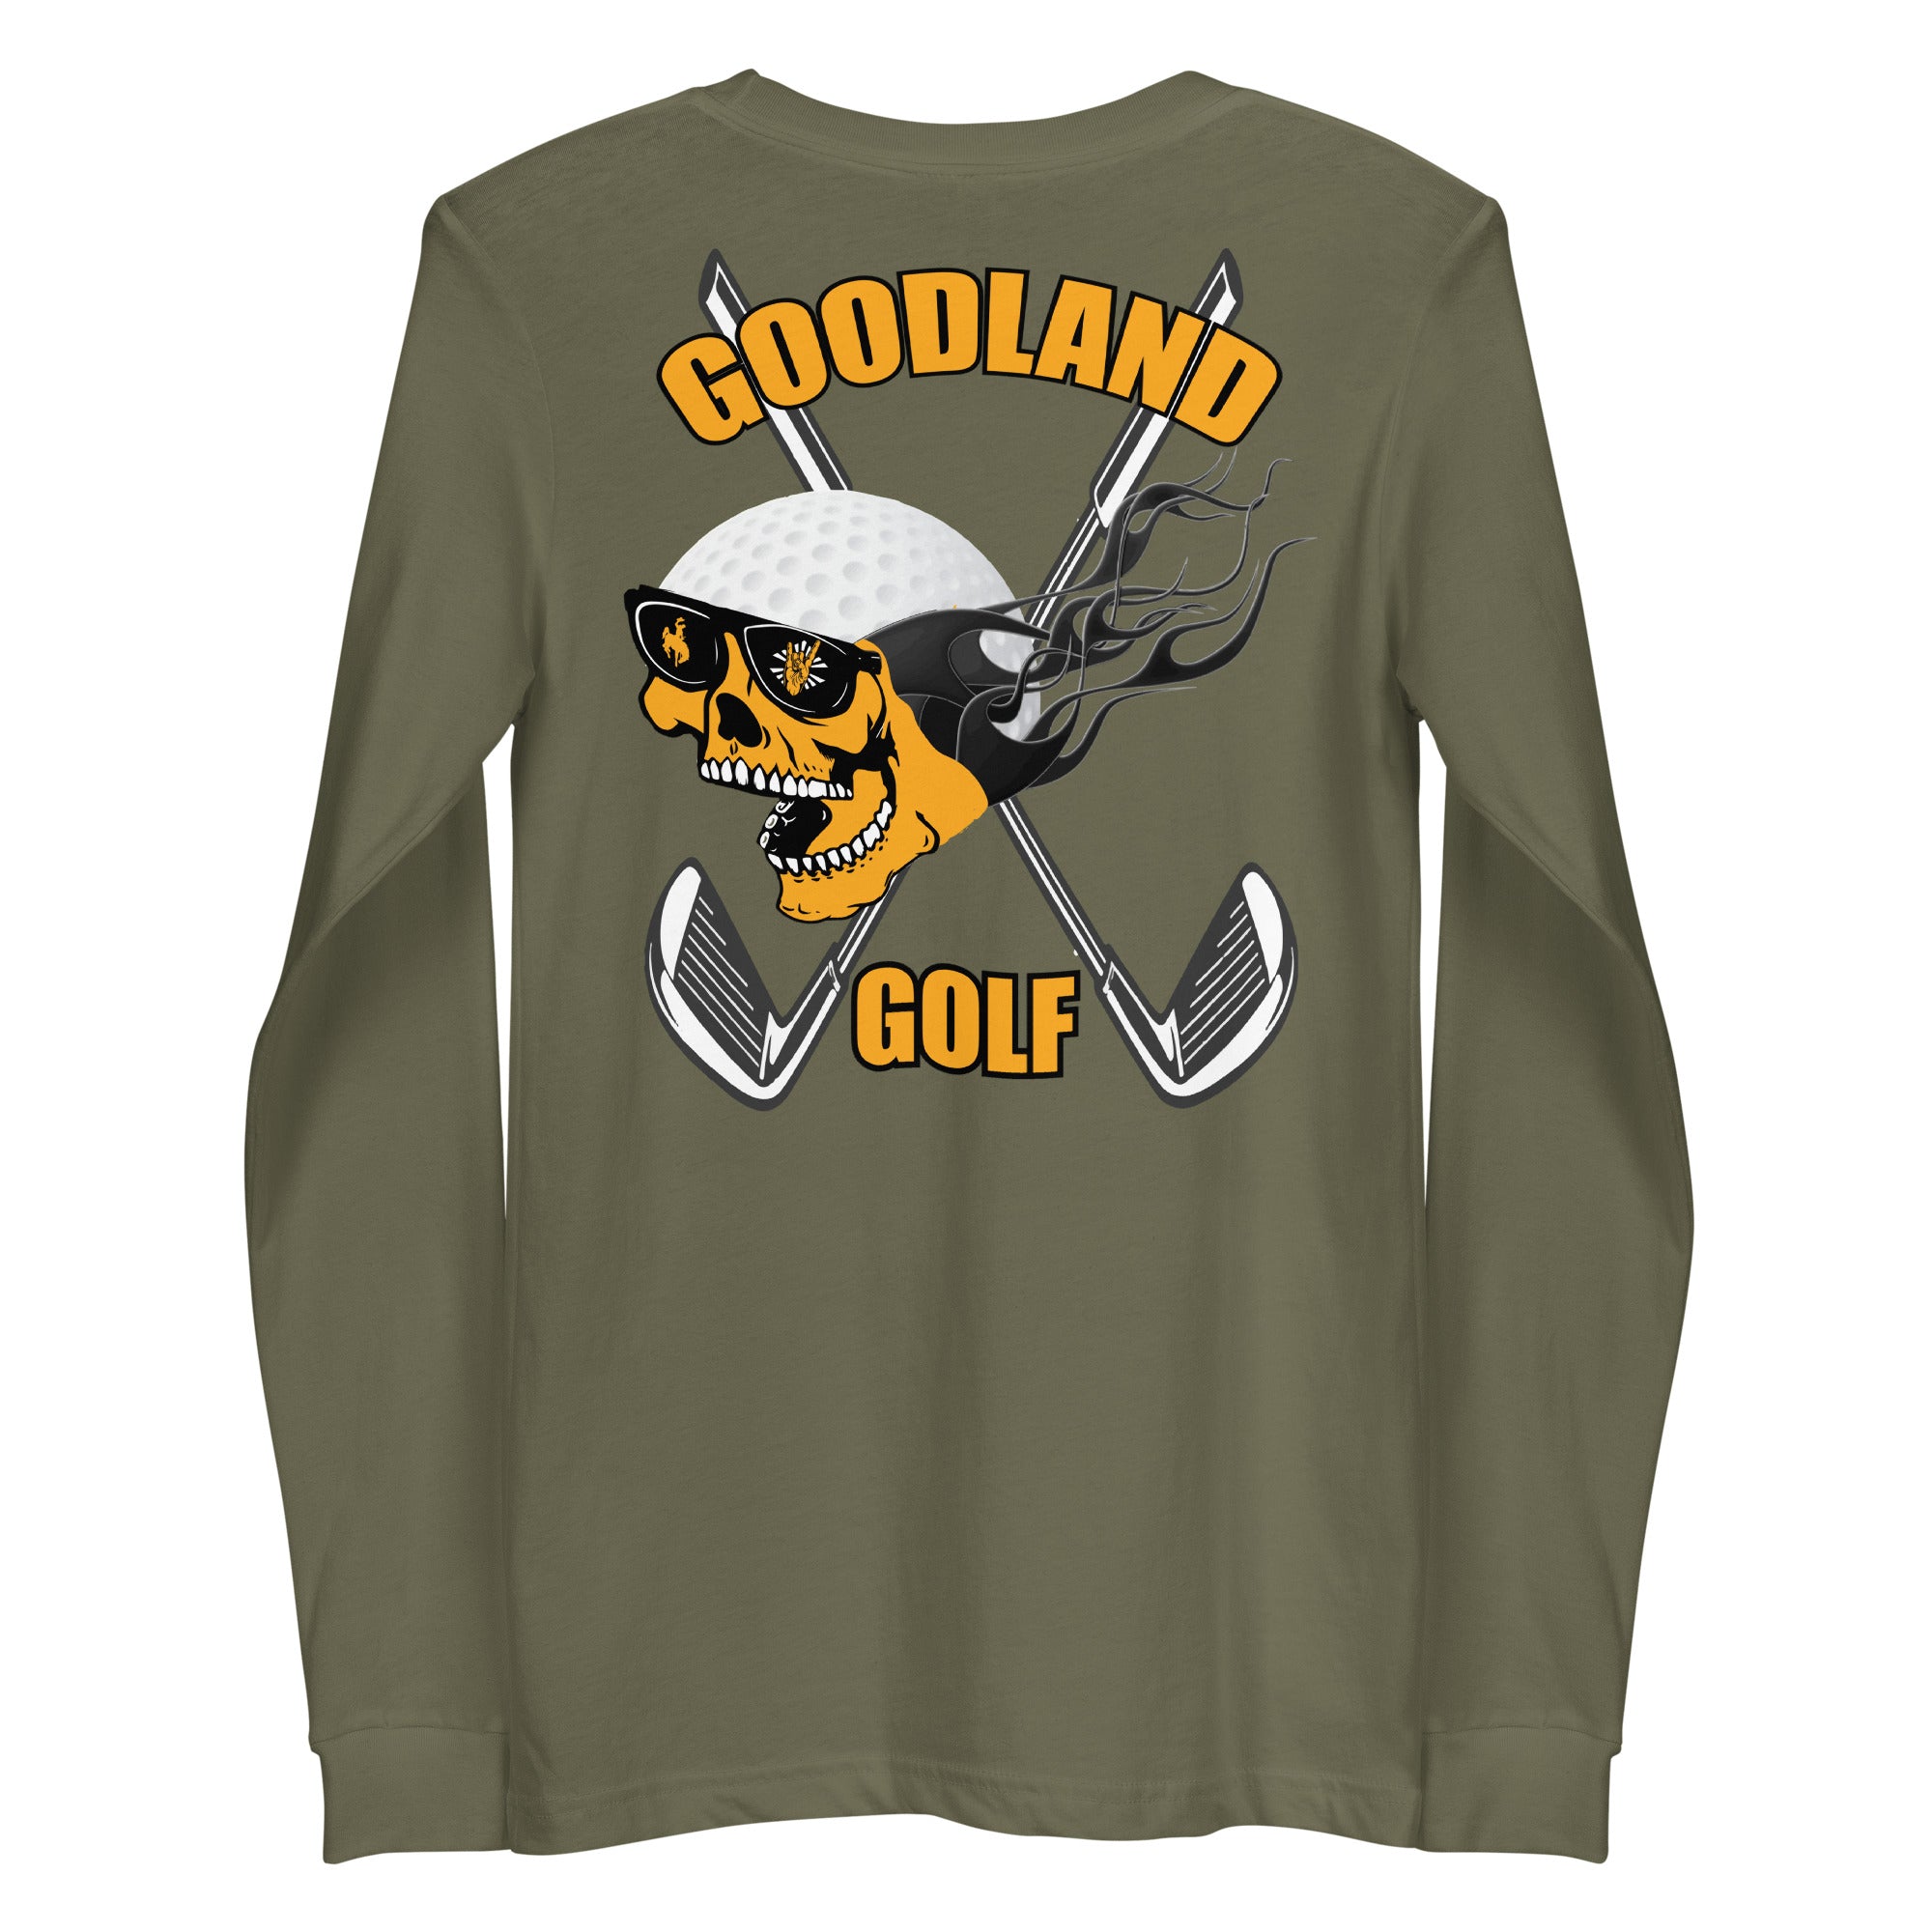 Goodland Golf Unisex Long Sleeve Tee